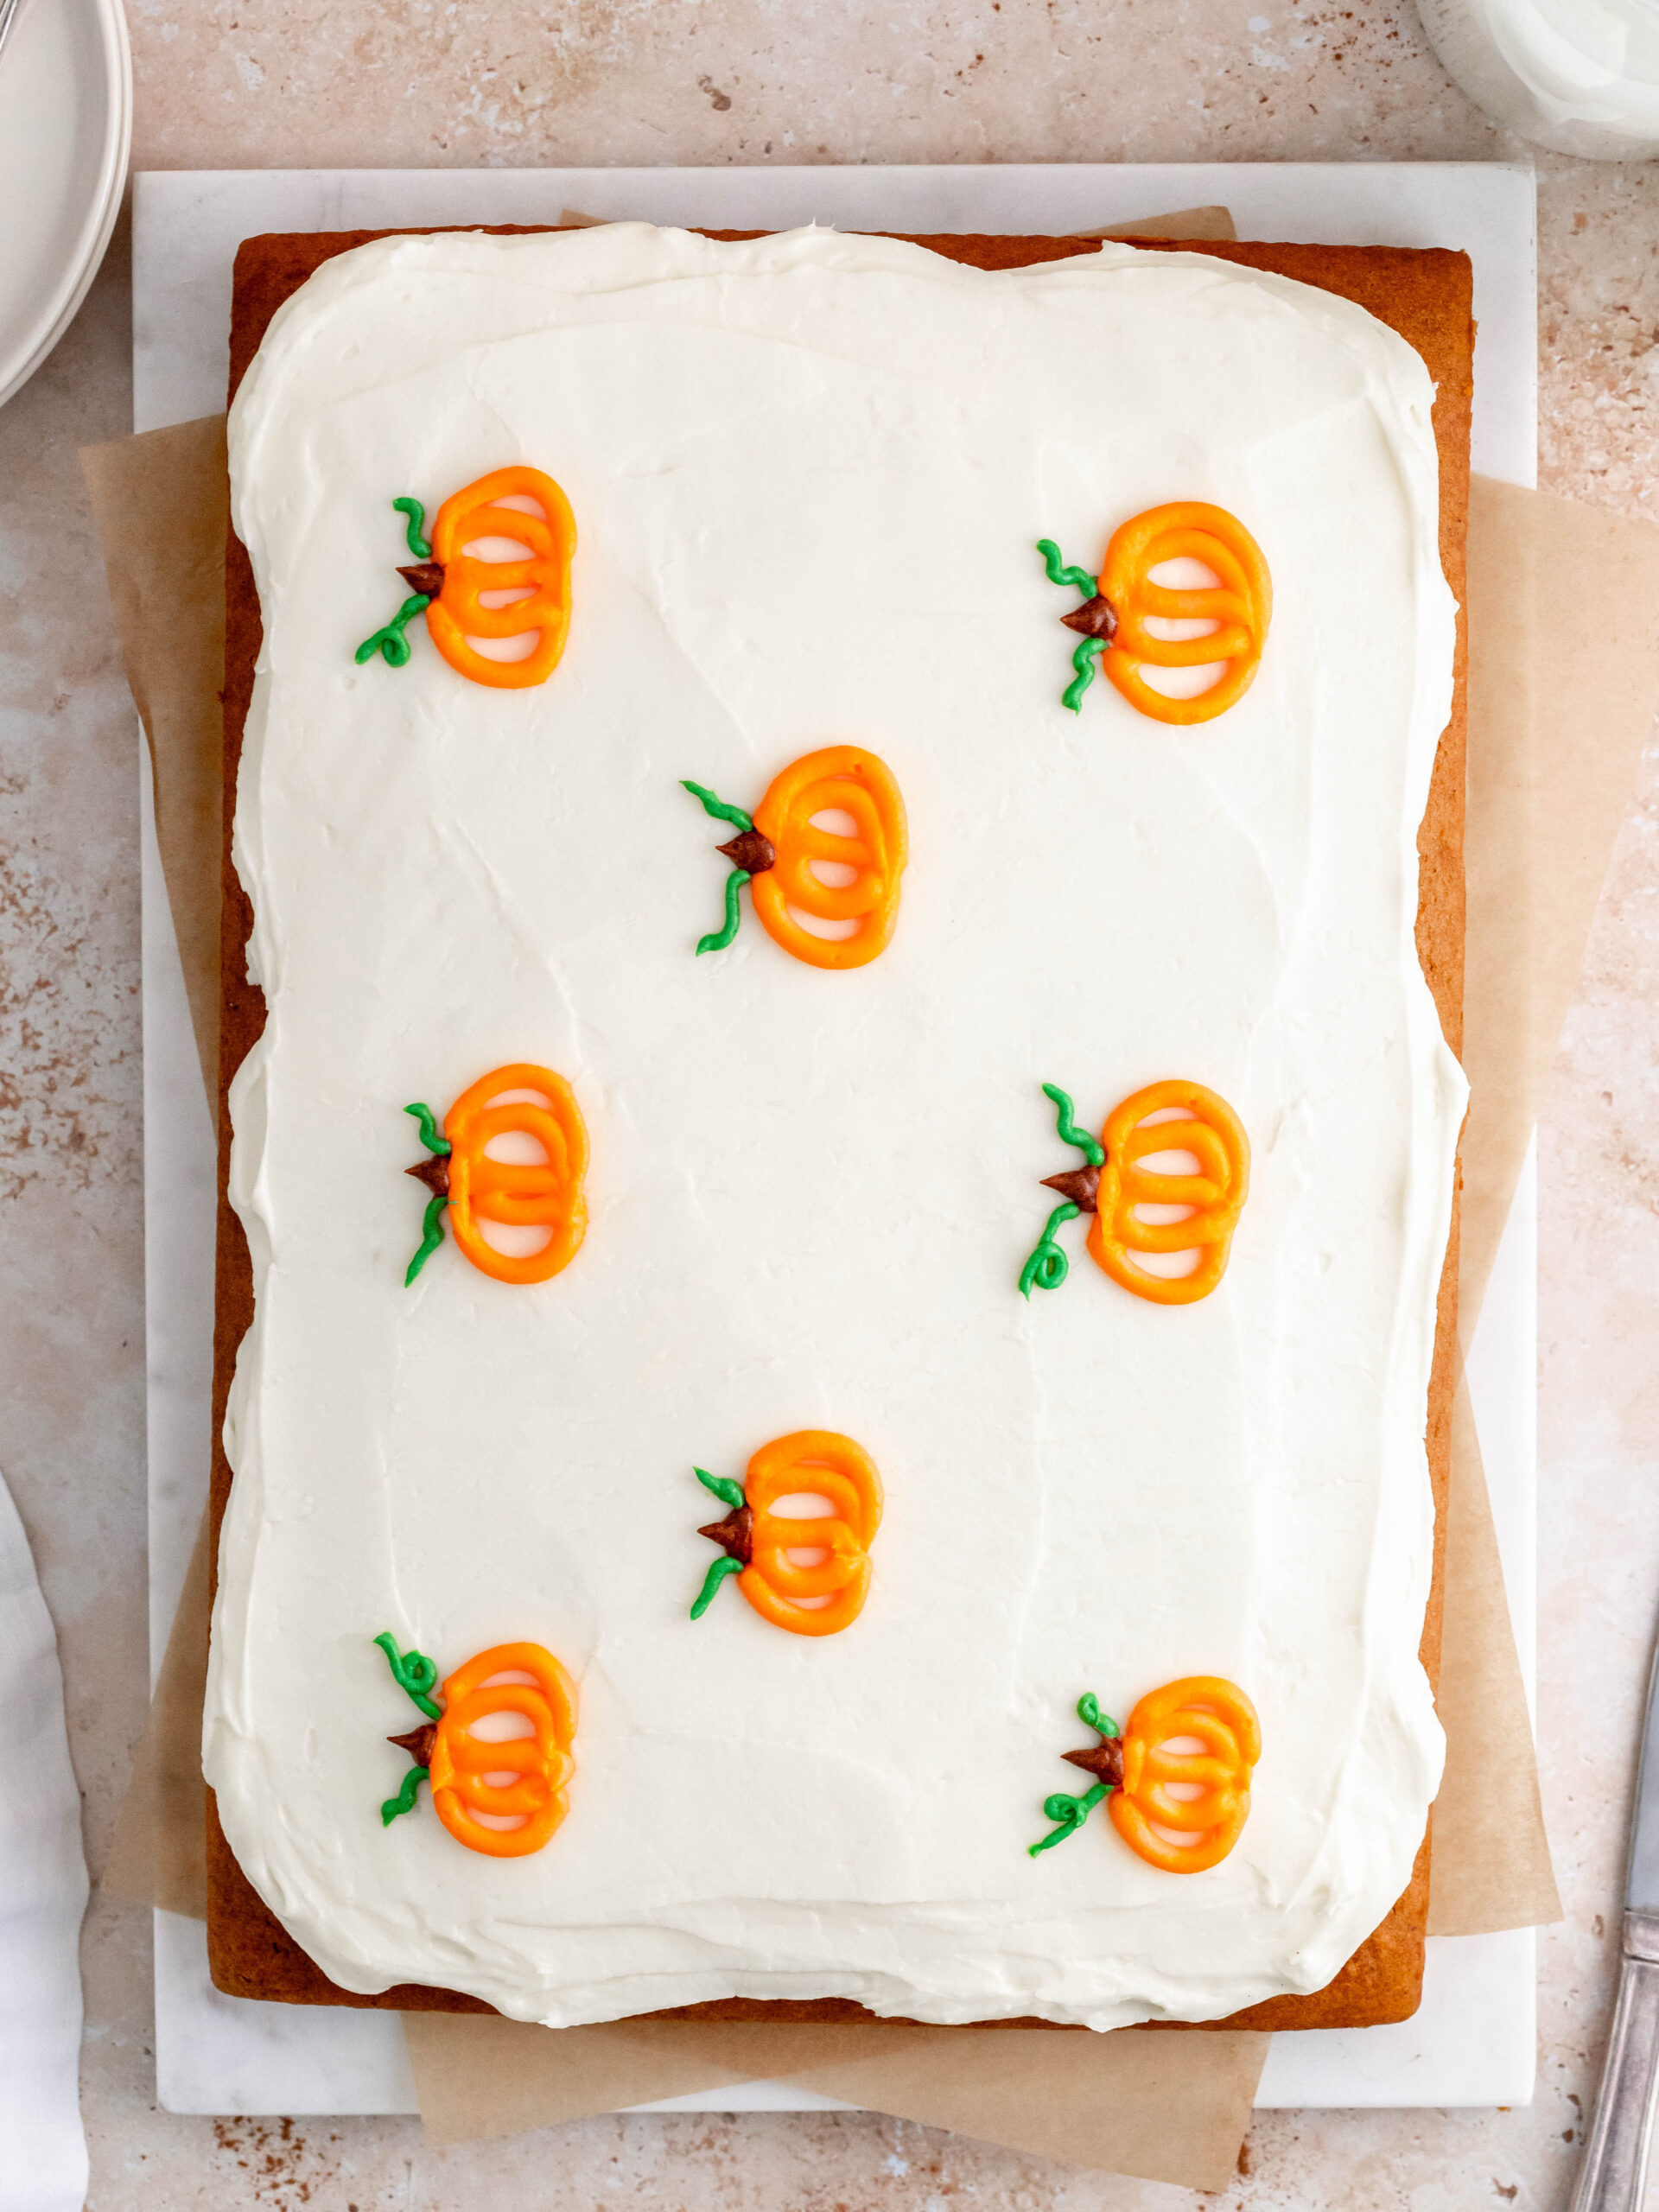 Pumpkin sheet cake on a serving tray.